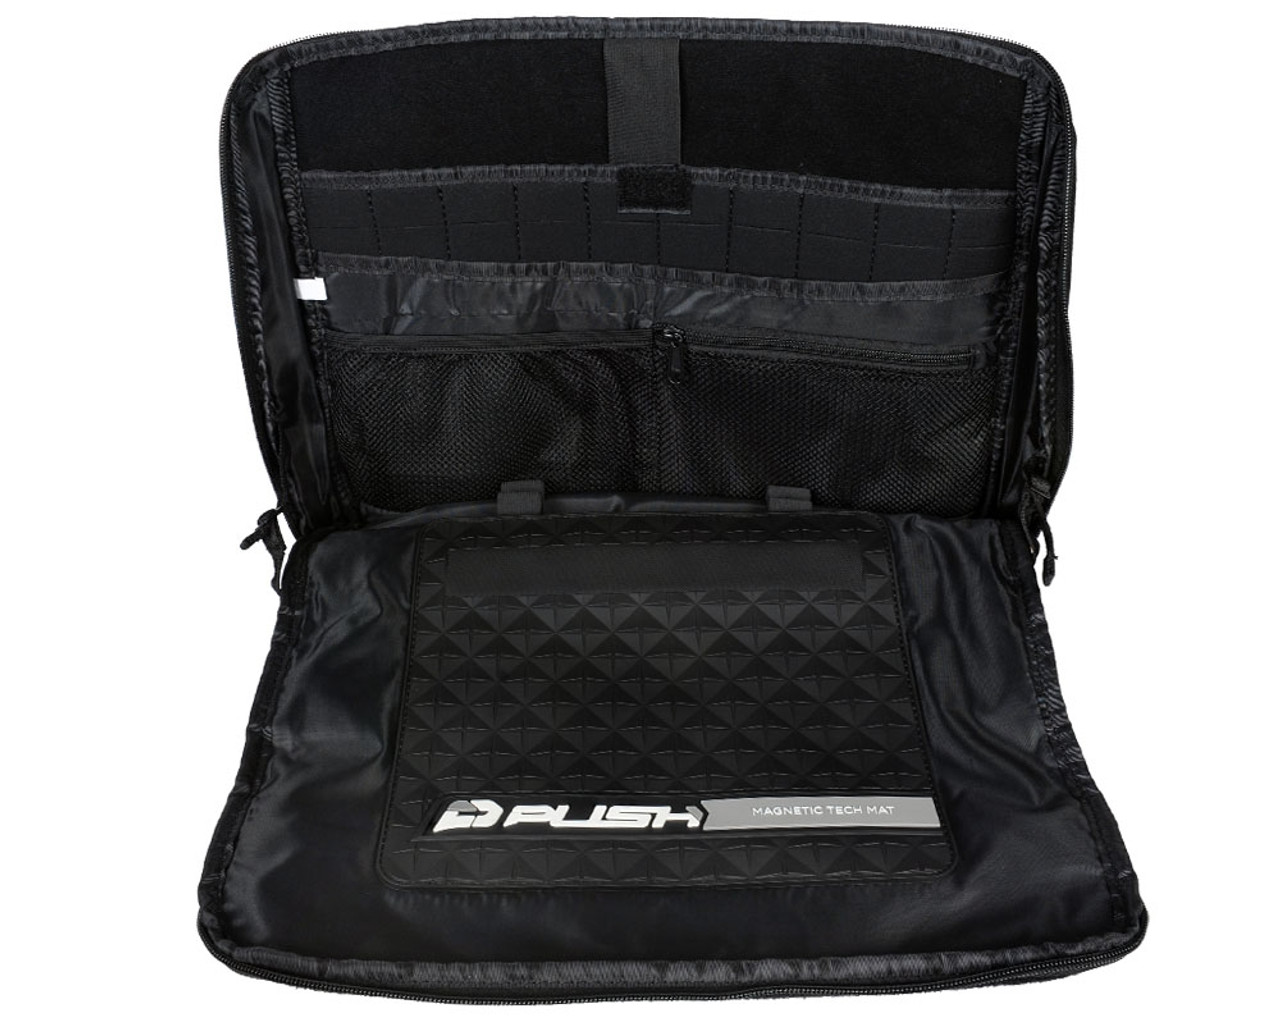 Push Division One Autococker Marker Bag